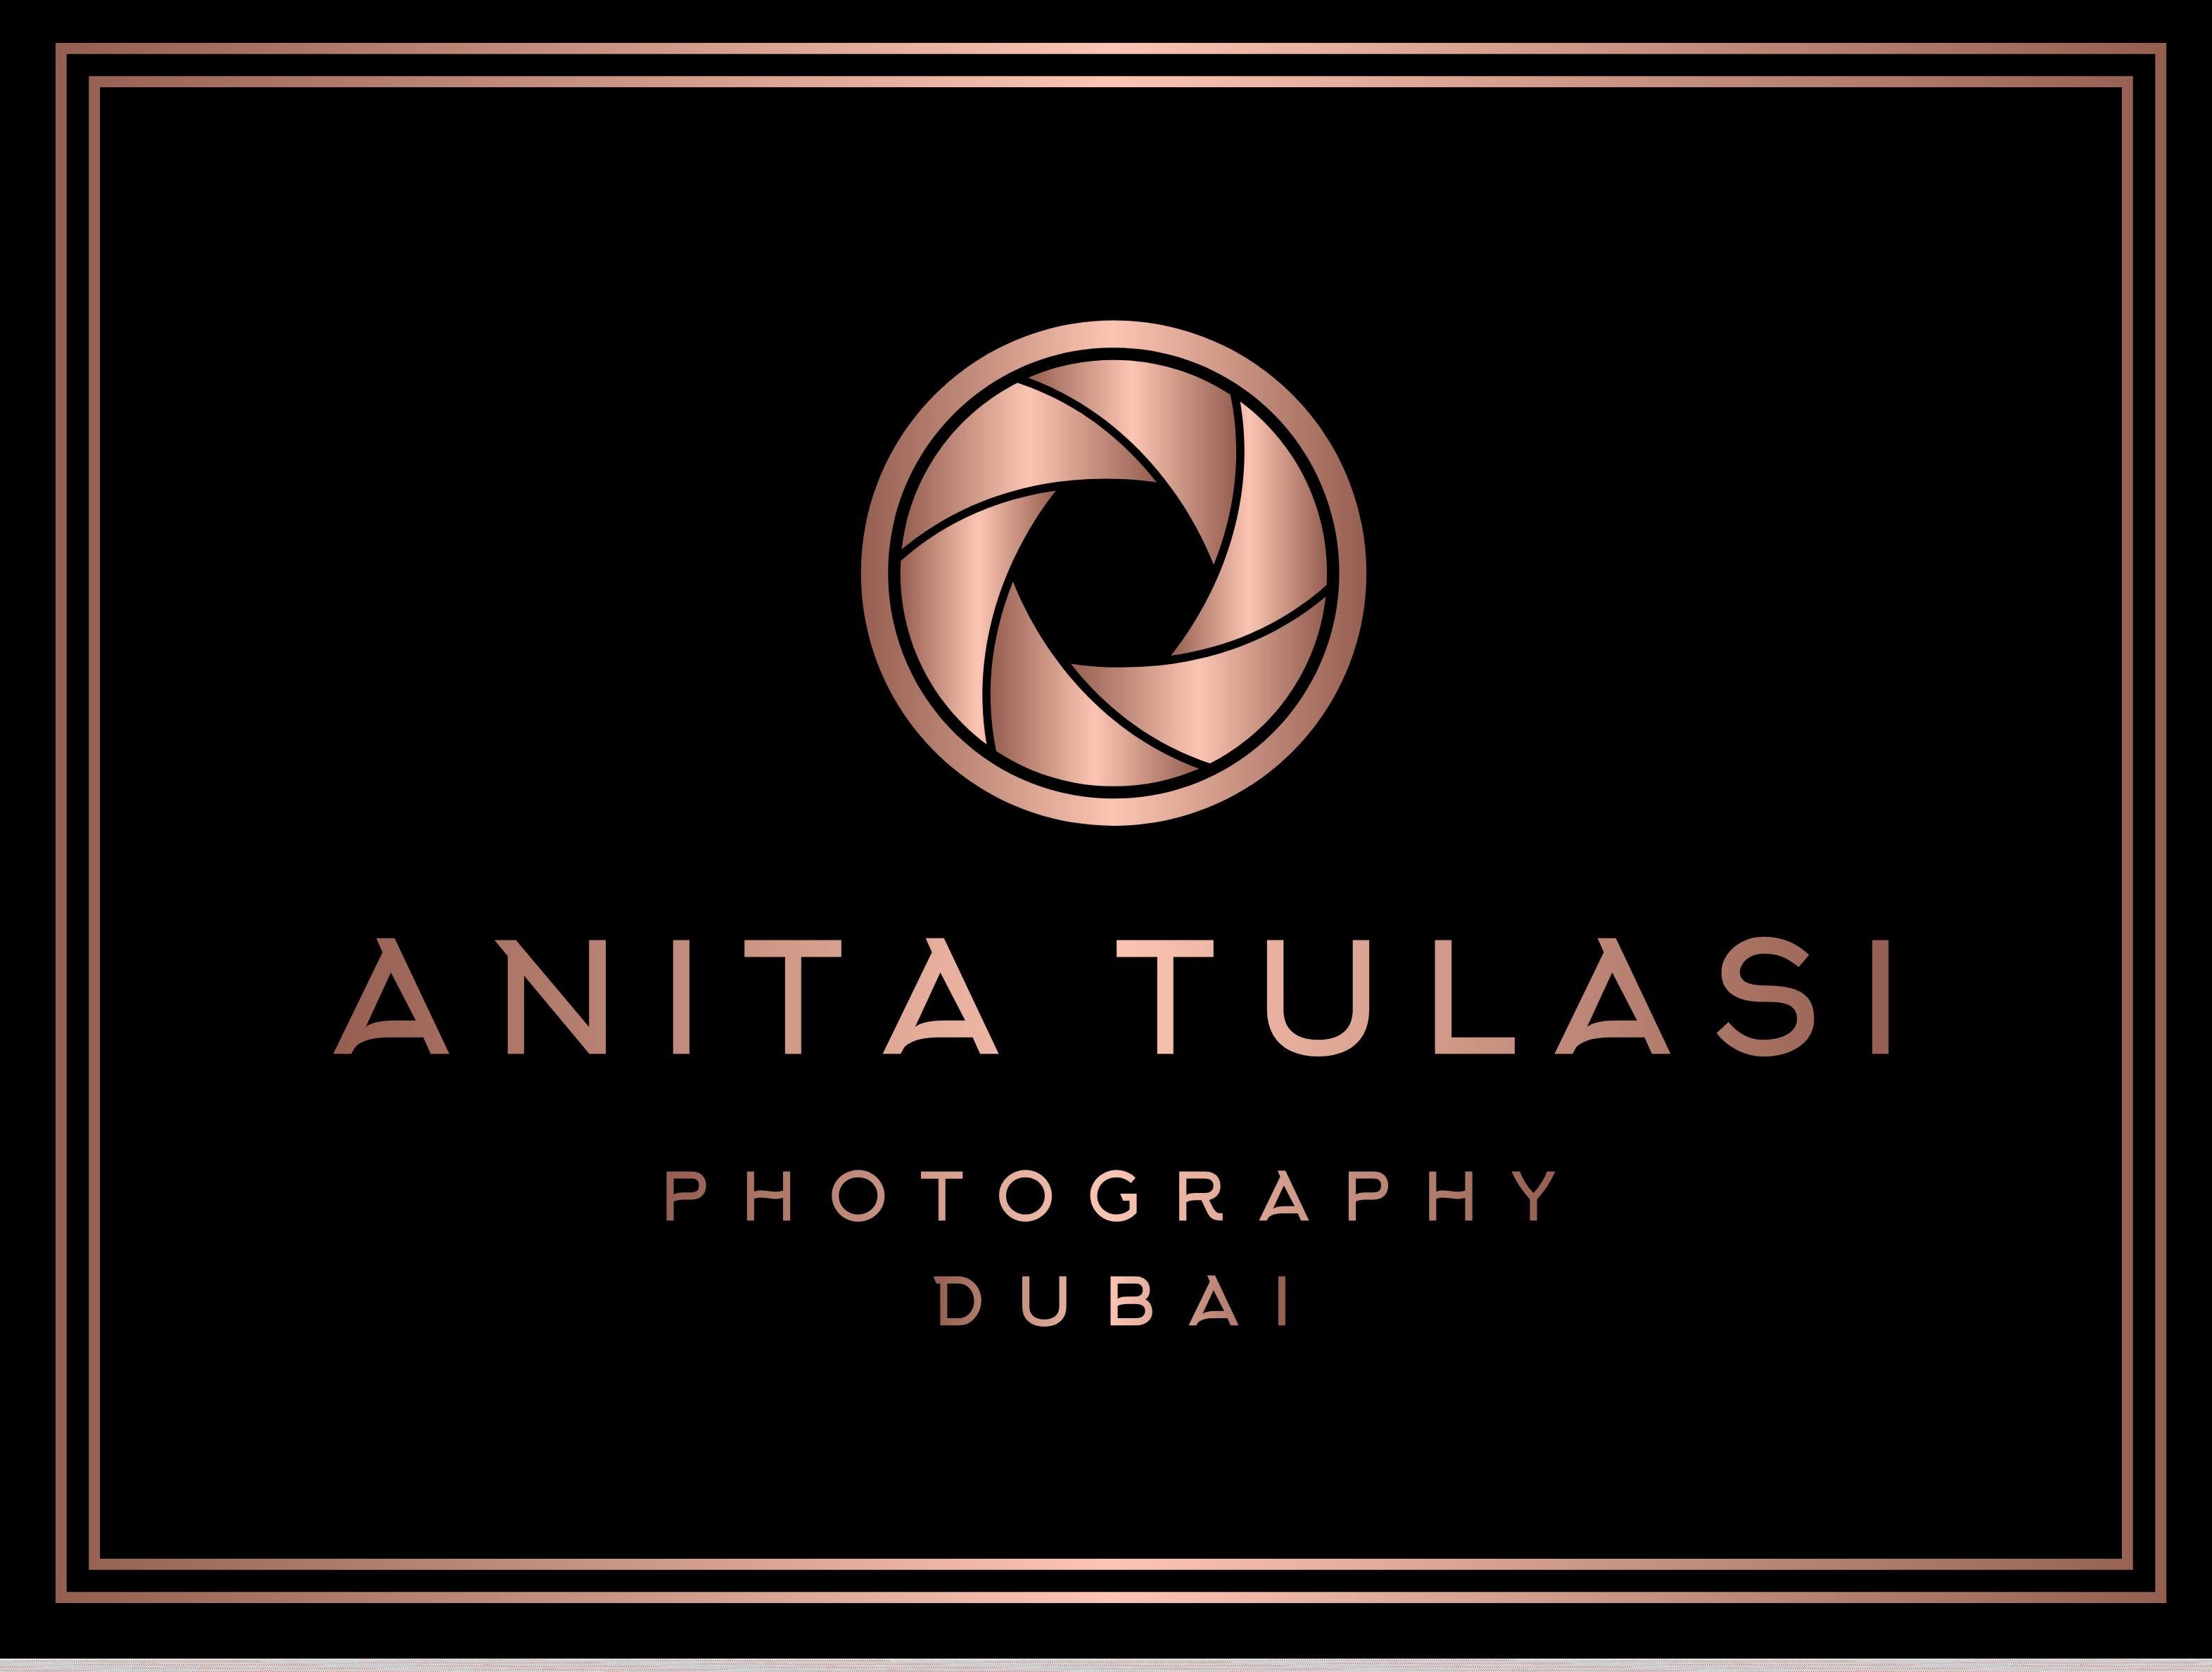 Anita Tulasi Photography